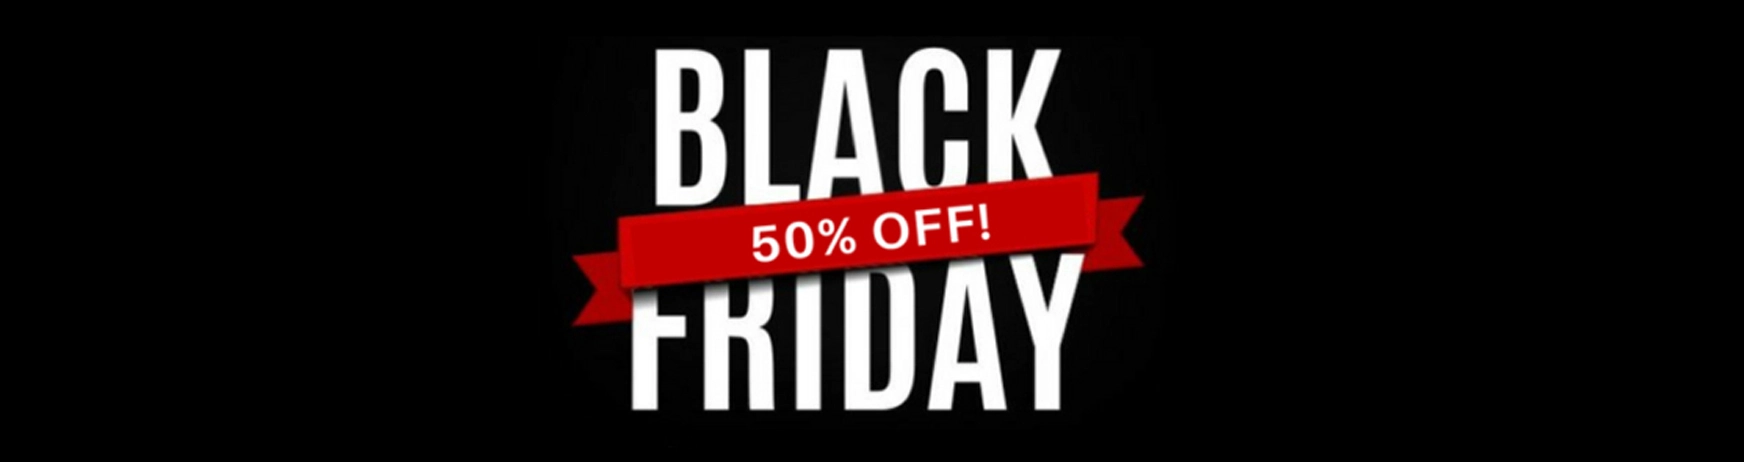 Black Friday, додаткові бонуси +50%